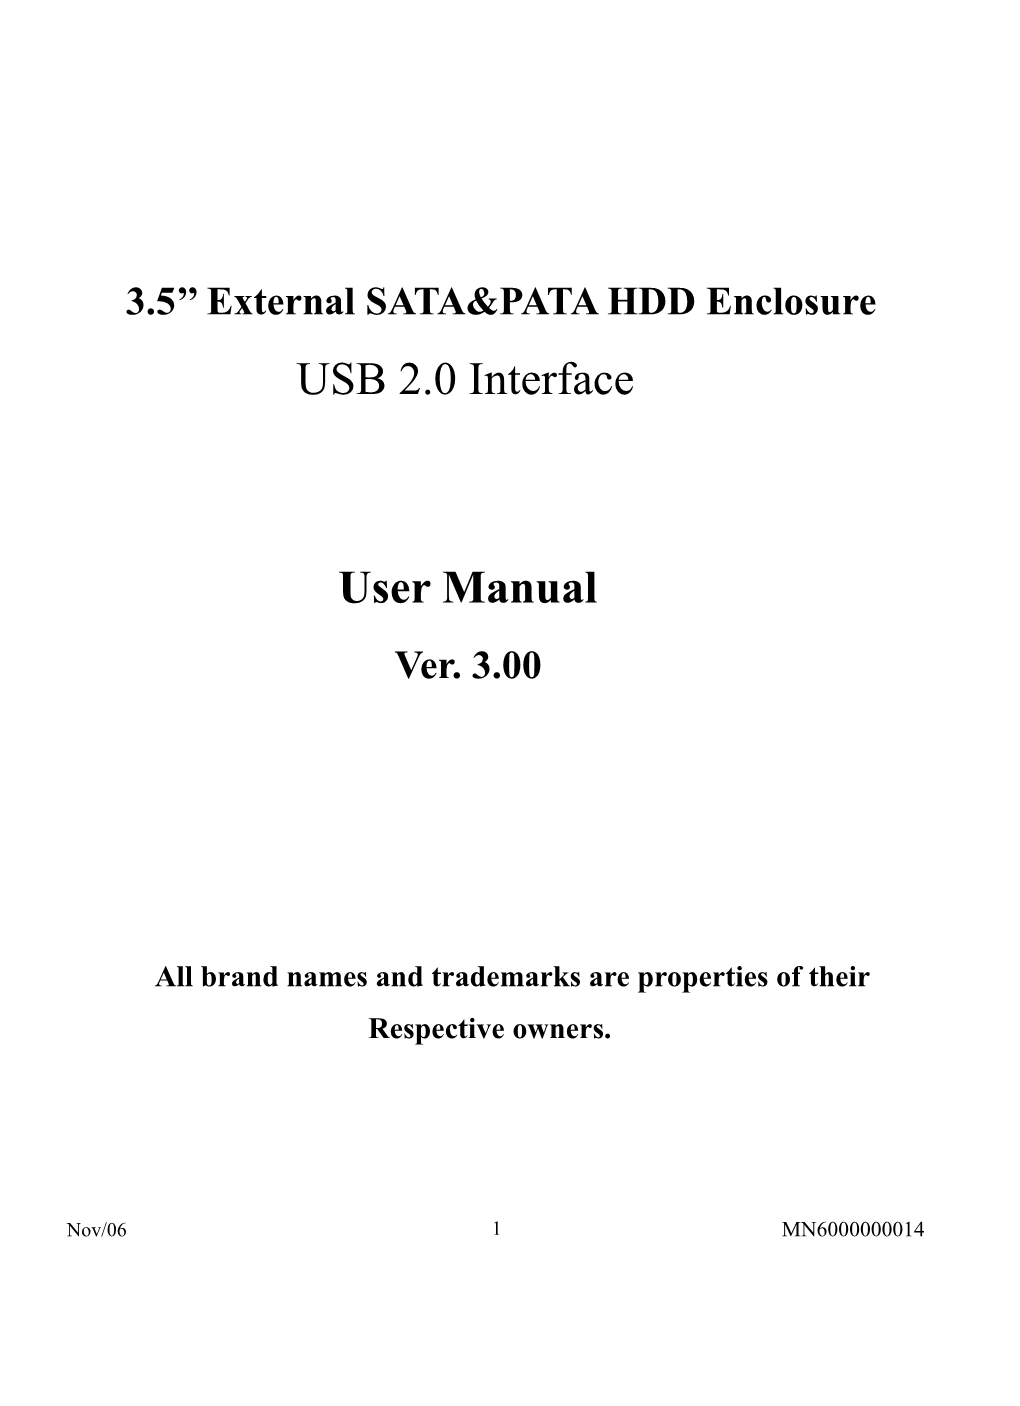 USB 2.0 Interface User Manual